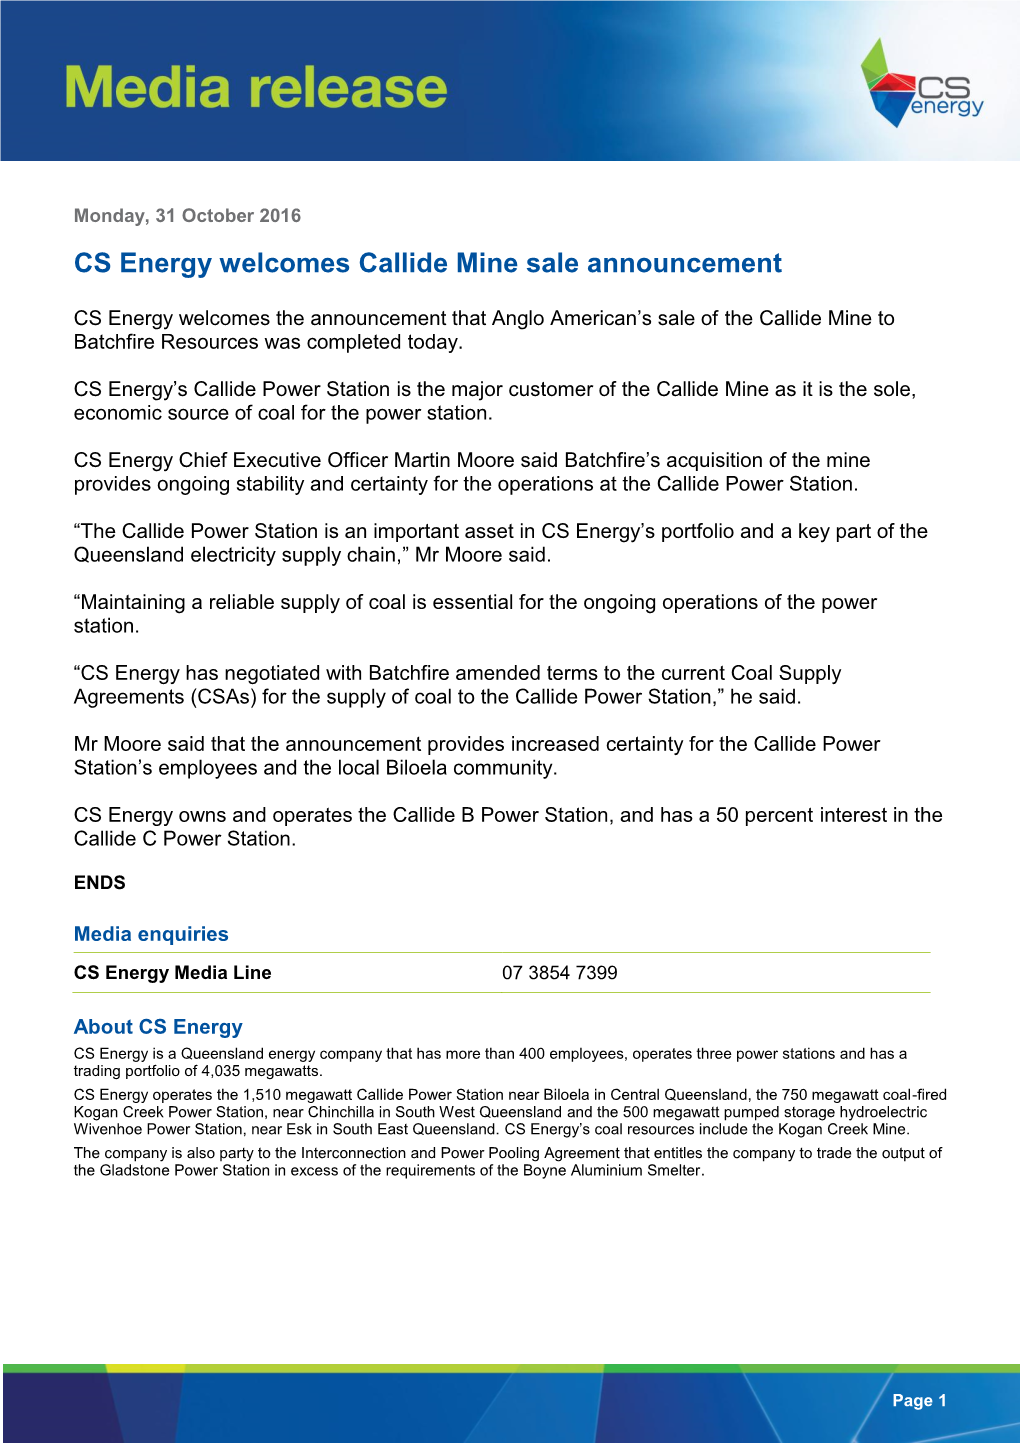 CS Energy Welcomes Callide Mine Sale Announcement